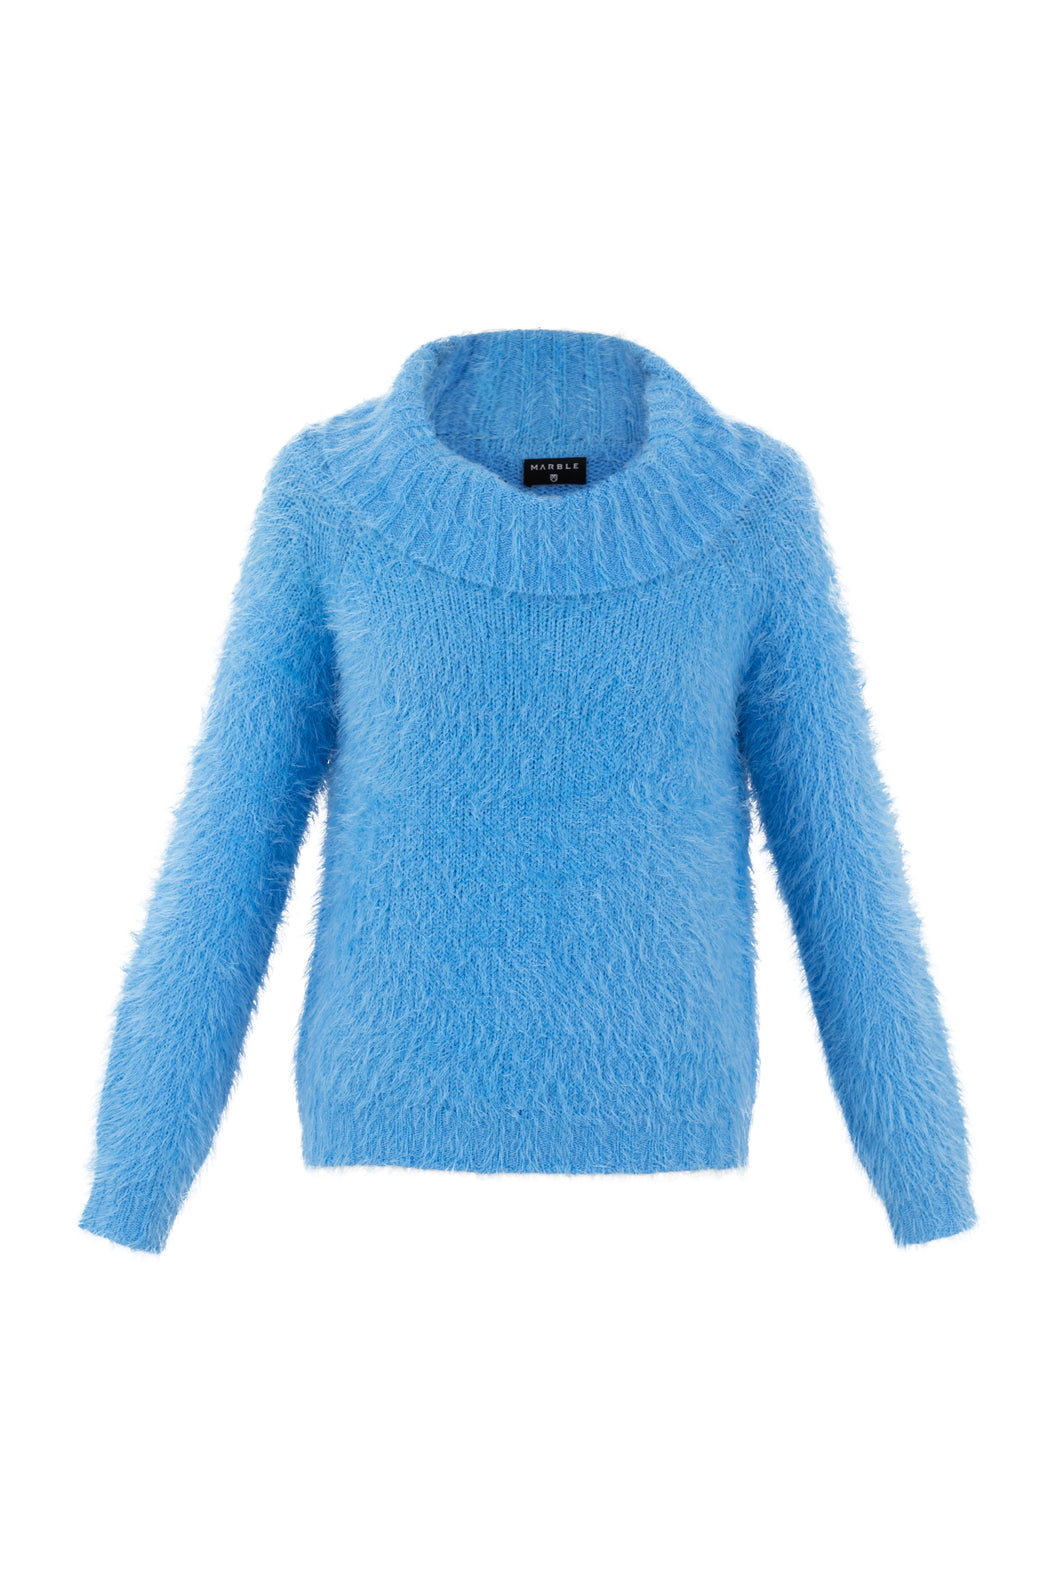 Marble Powder Blue Long Sleeve Feather Yarn Sweater